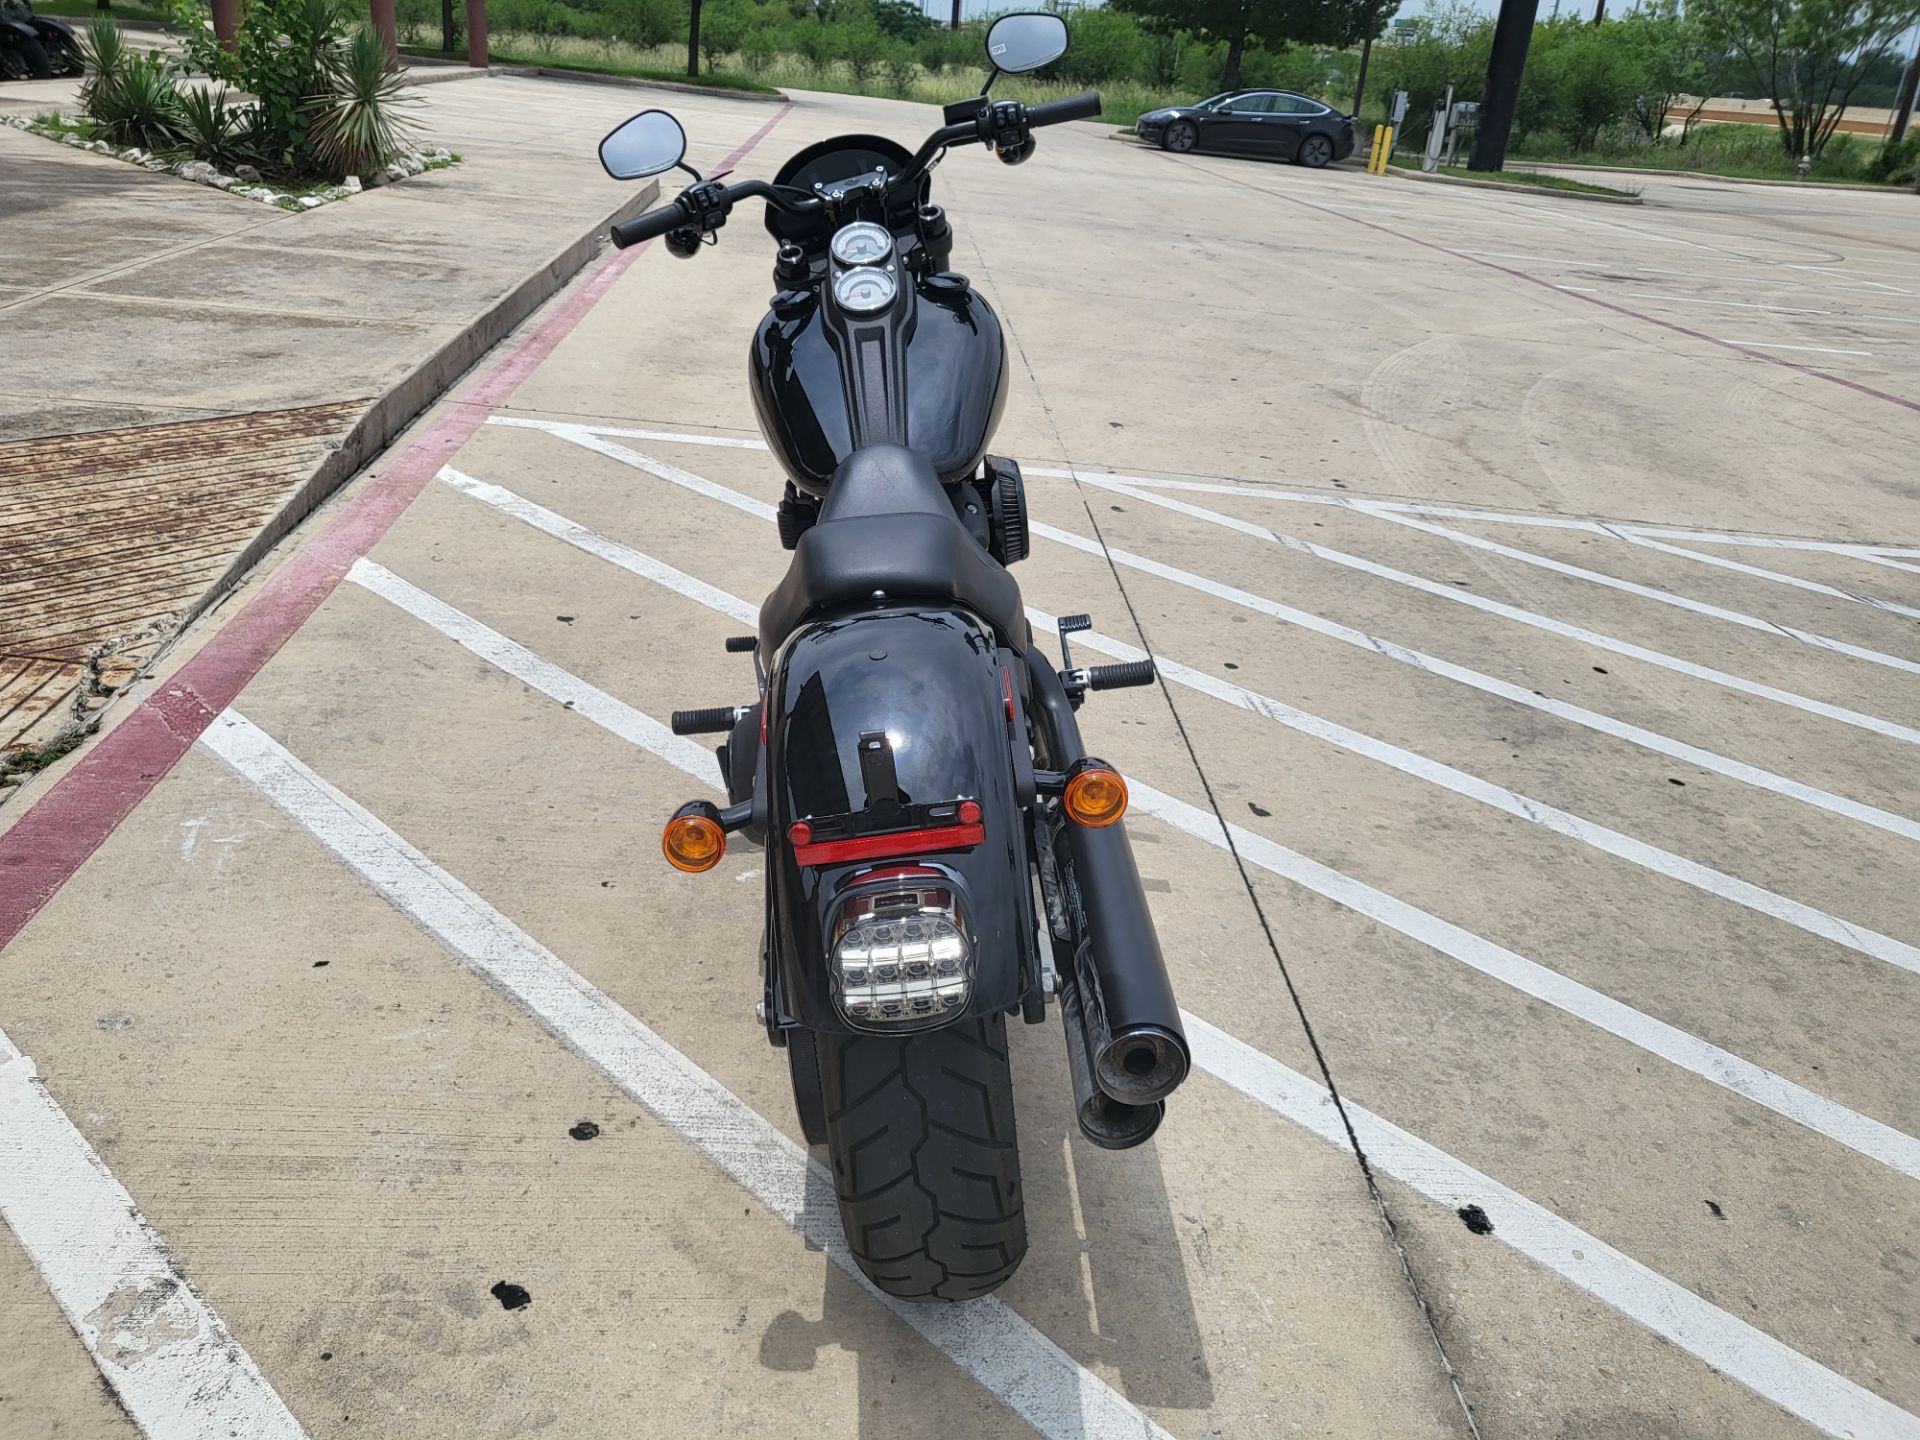 2021 Harley-Davidson Low Rider®S in San Antonio, Texas - Photo 4